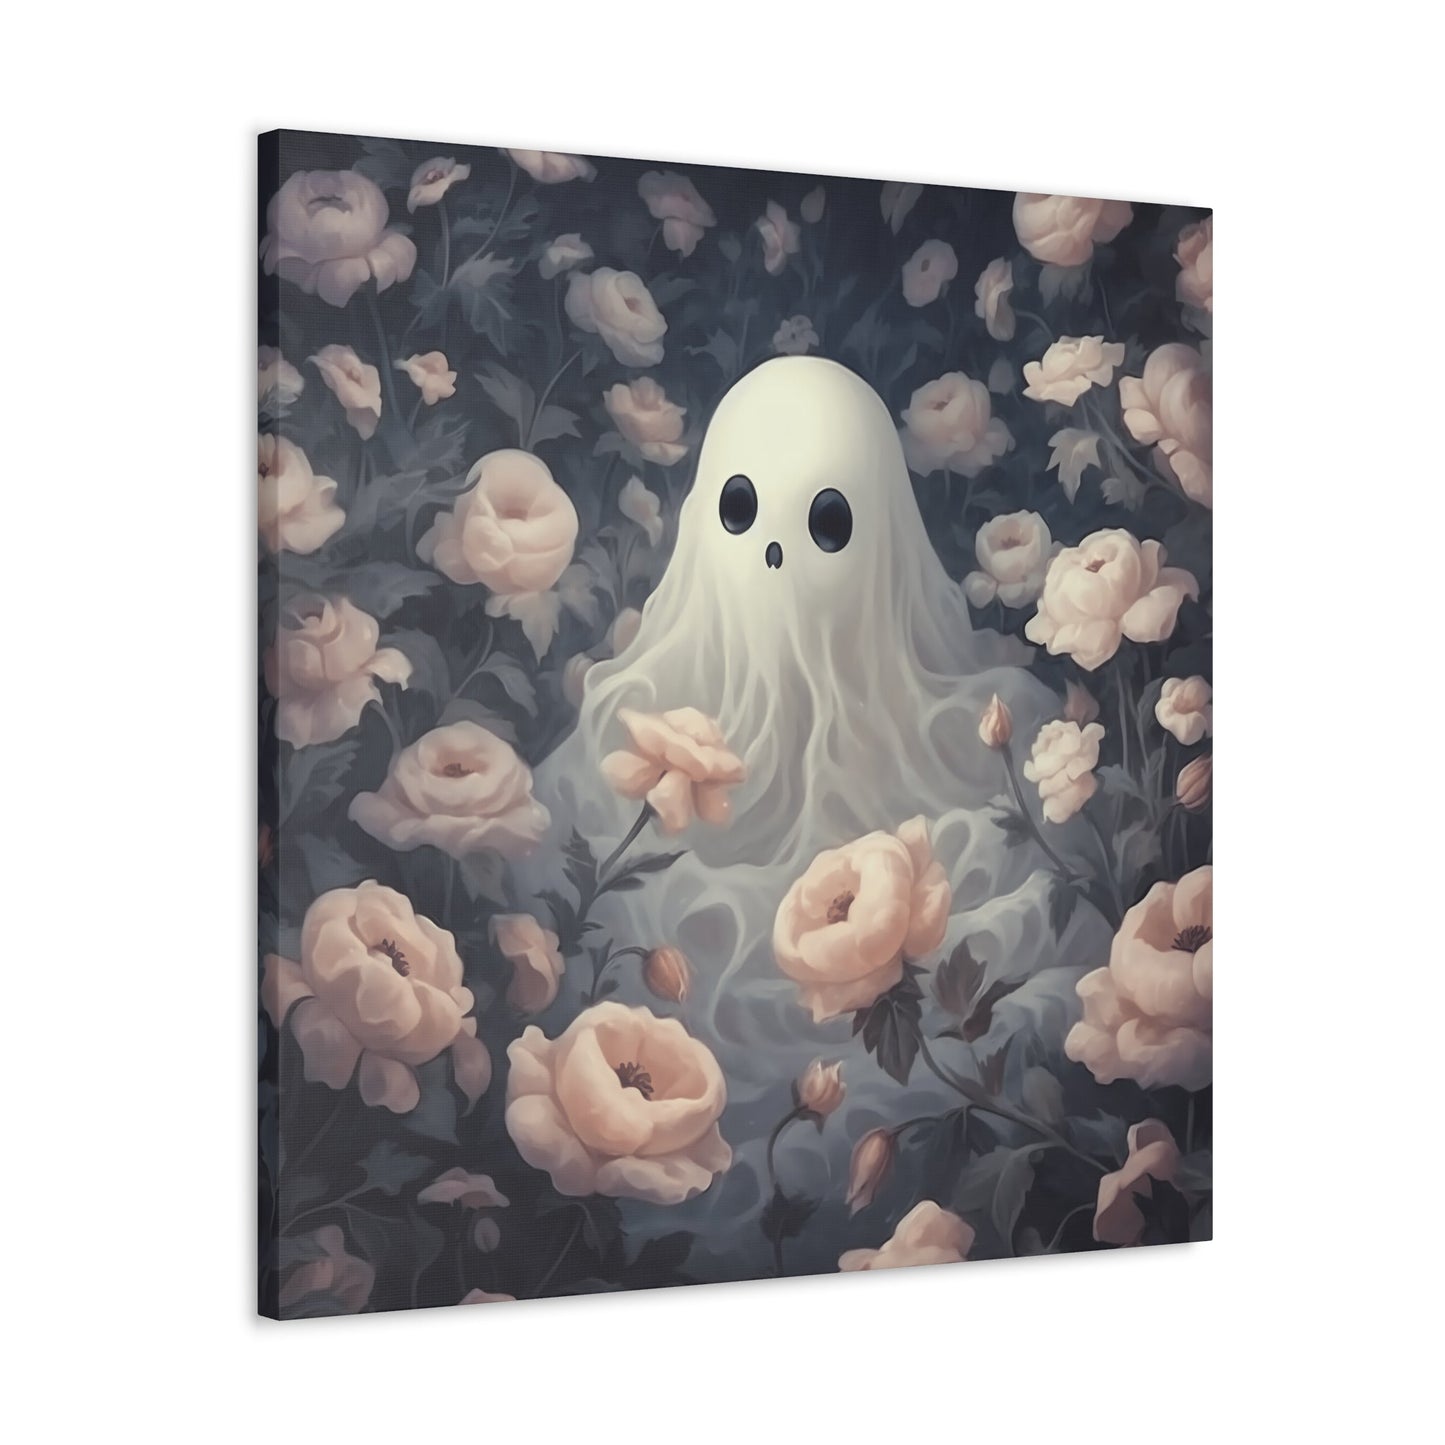 Cute Ghost in Rose Garden Canvas Gallery WrapCanvasVTZdesigns30″ x 30″1.25"Art & Wall DecorCanvasFall Picks